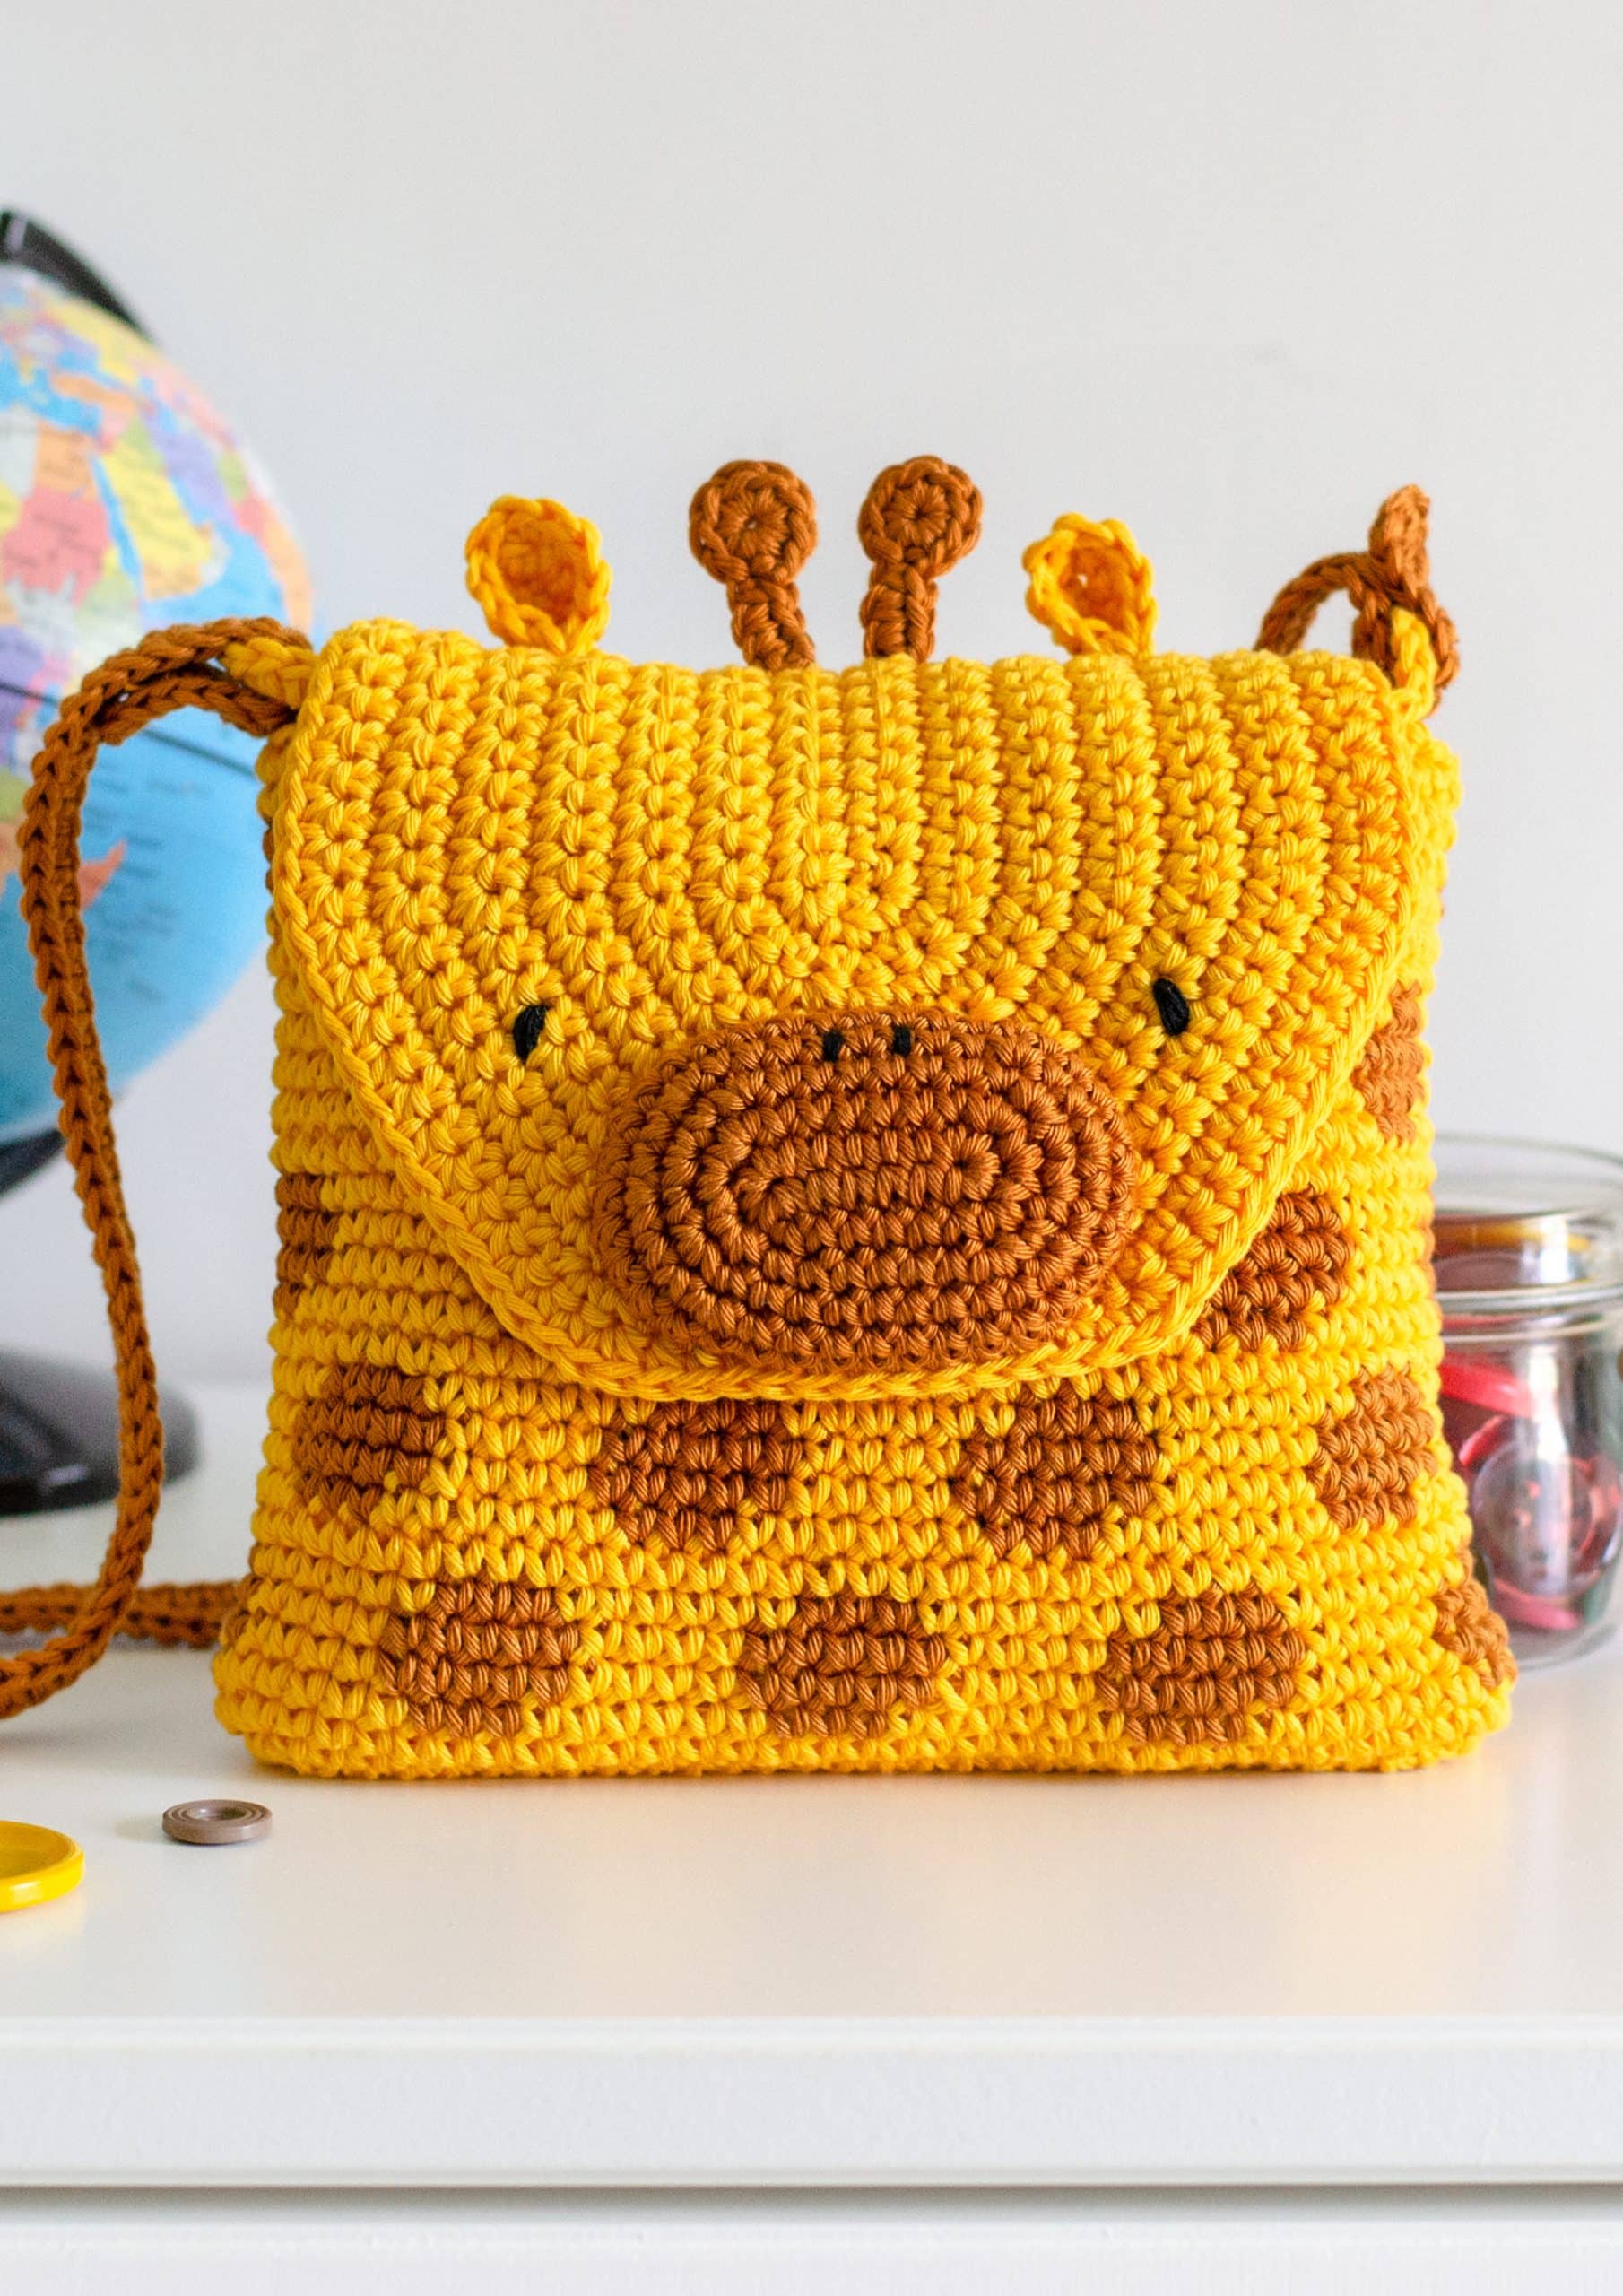 Giraffe crochet bag